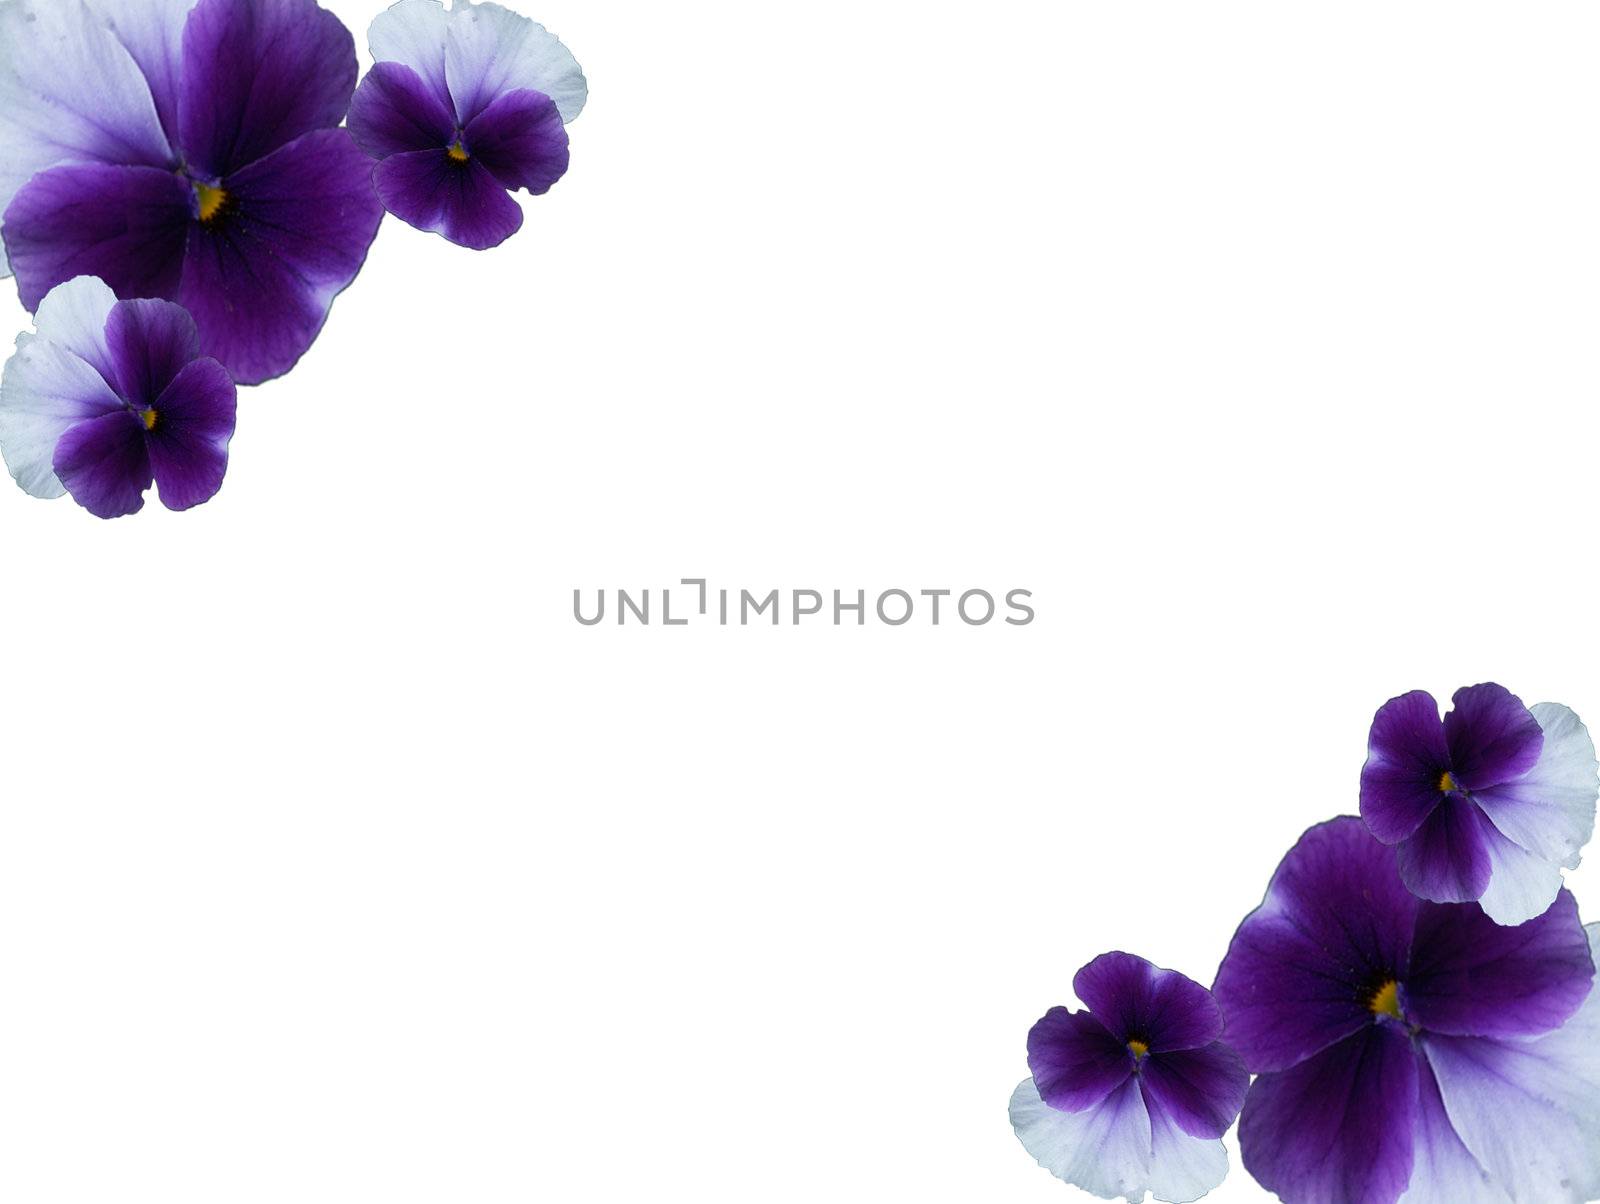 Framework from blue - violet flowers of pansies